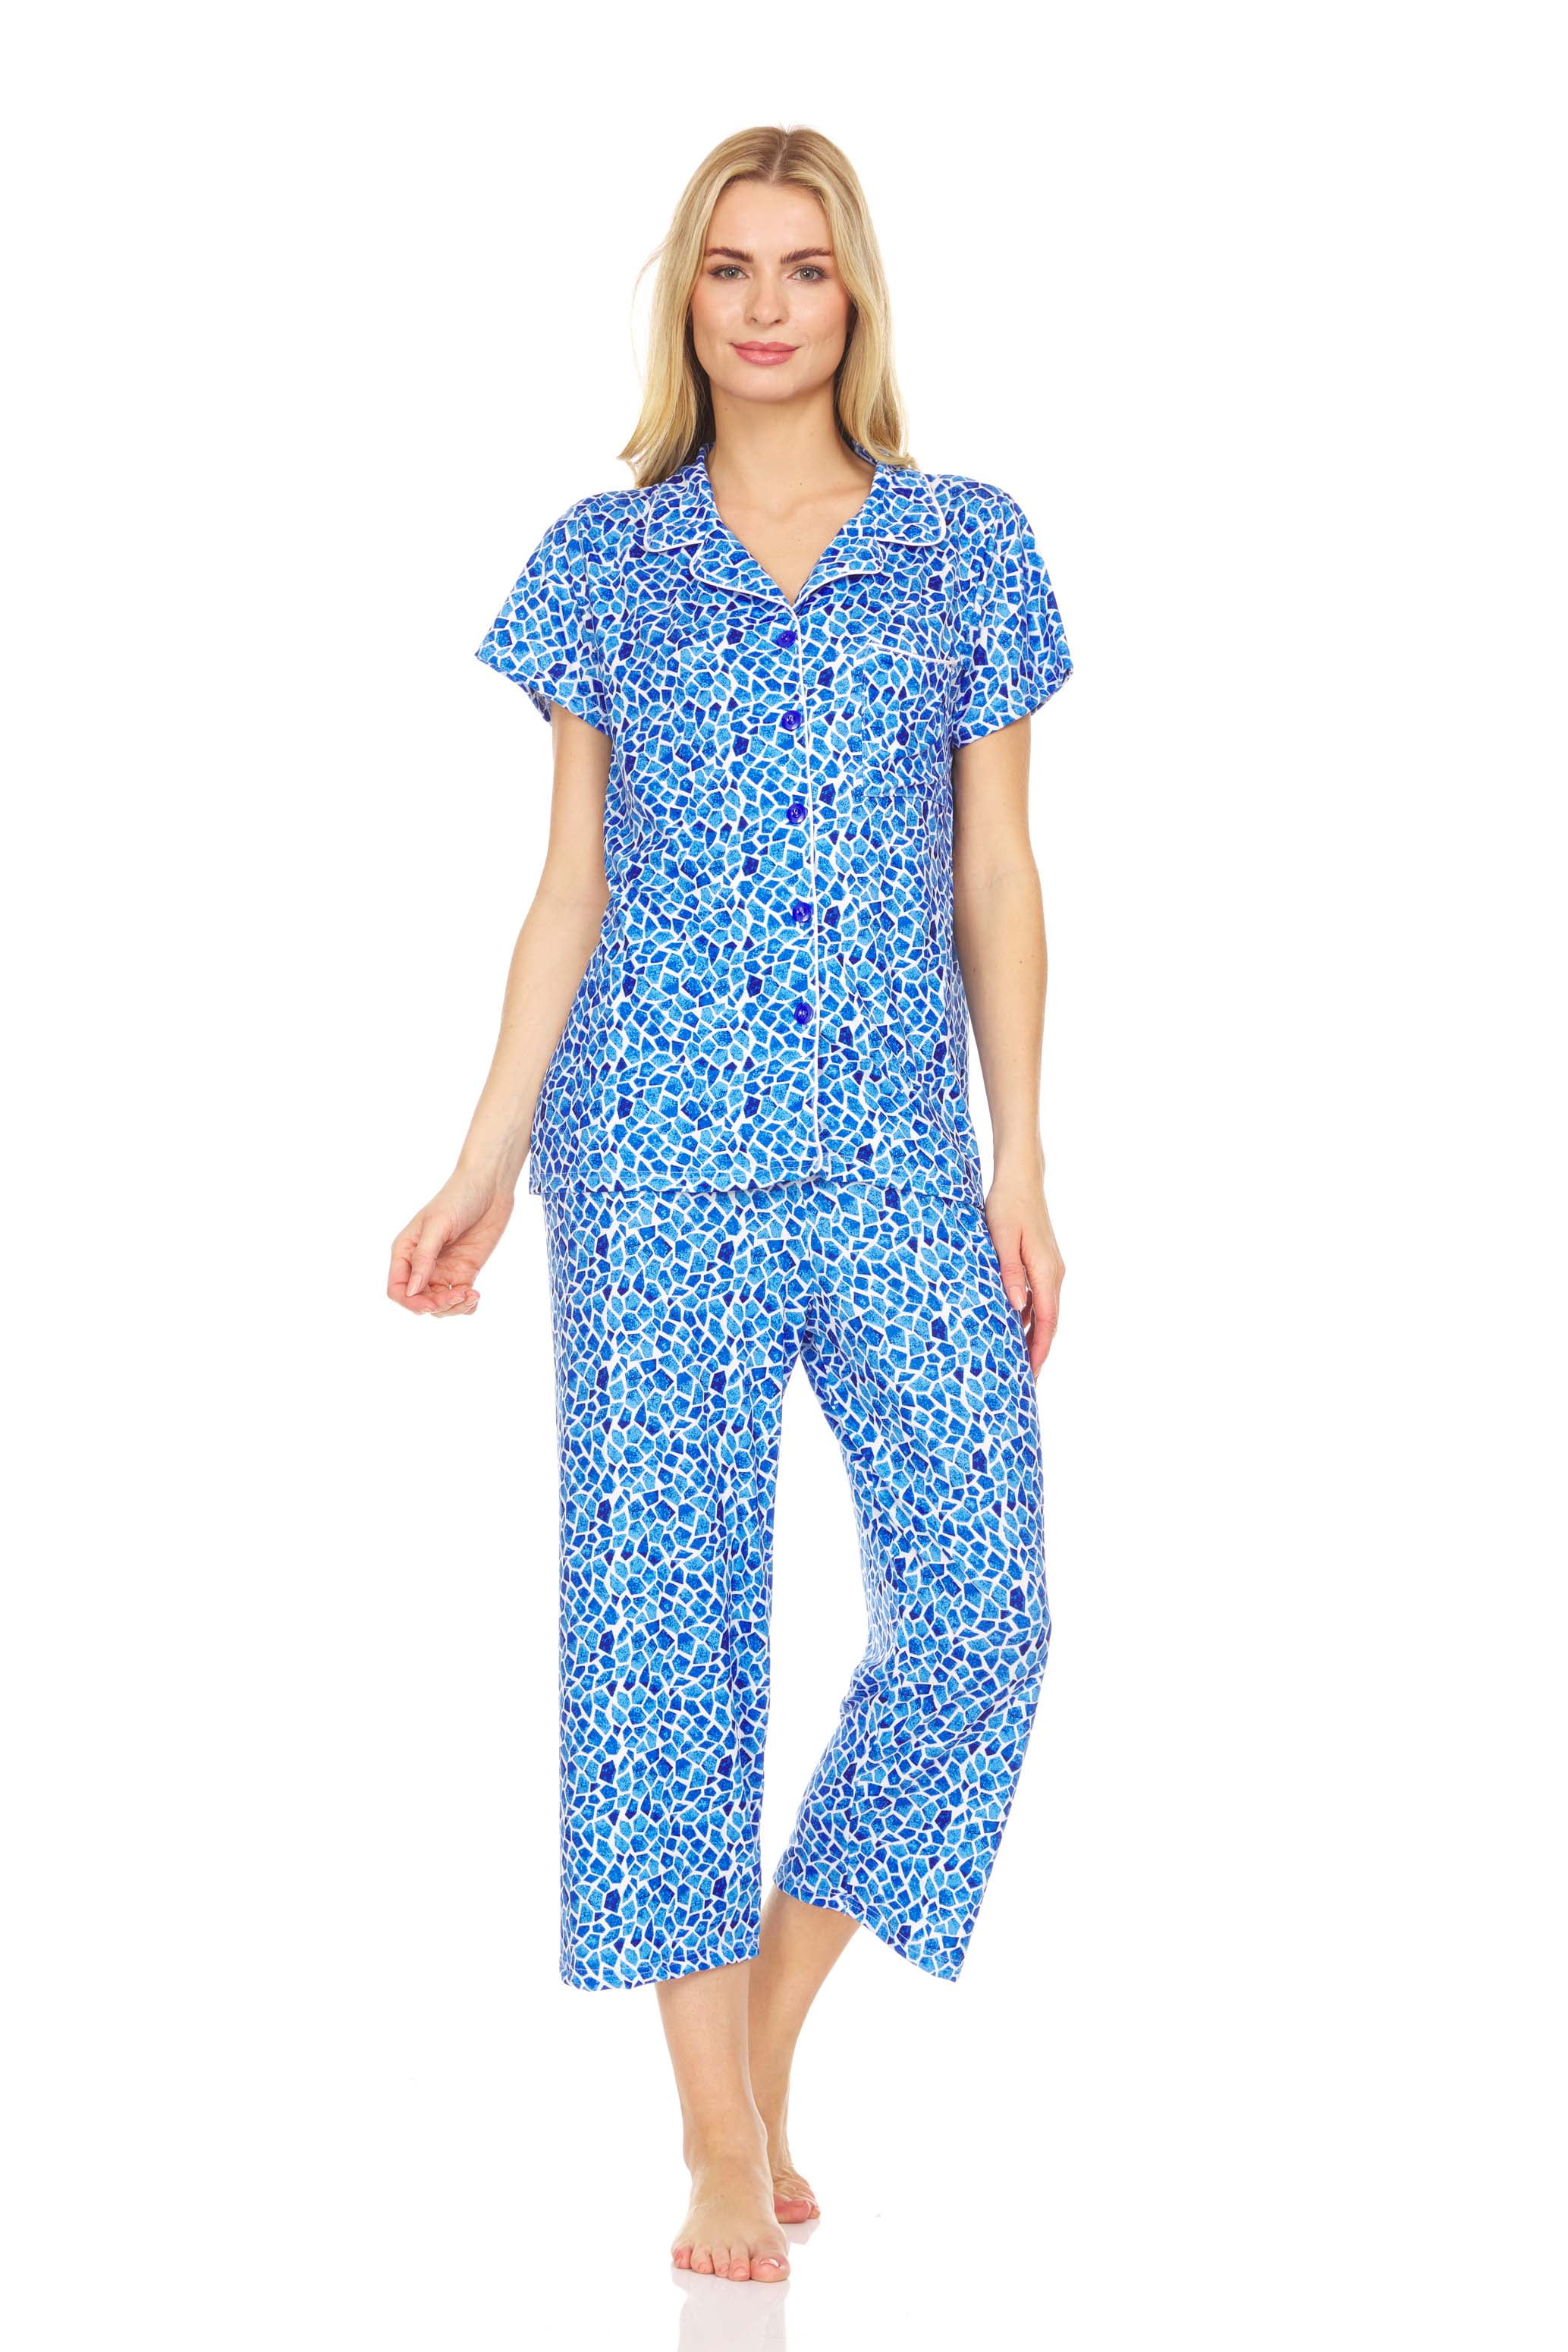 Lati Fashion - 8103C Womens Sleepwear Woman Short Sleeve Button Down ...